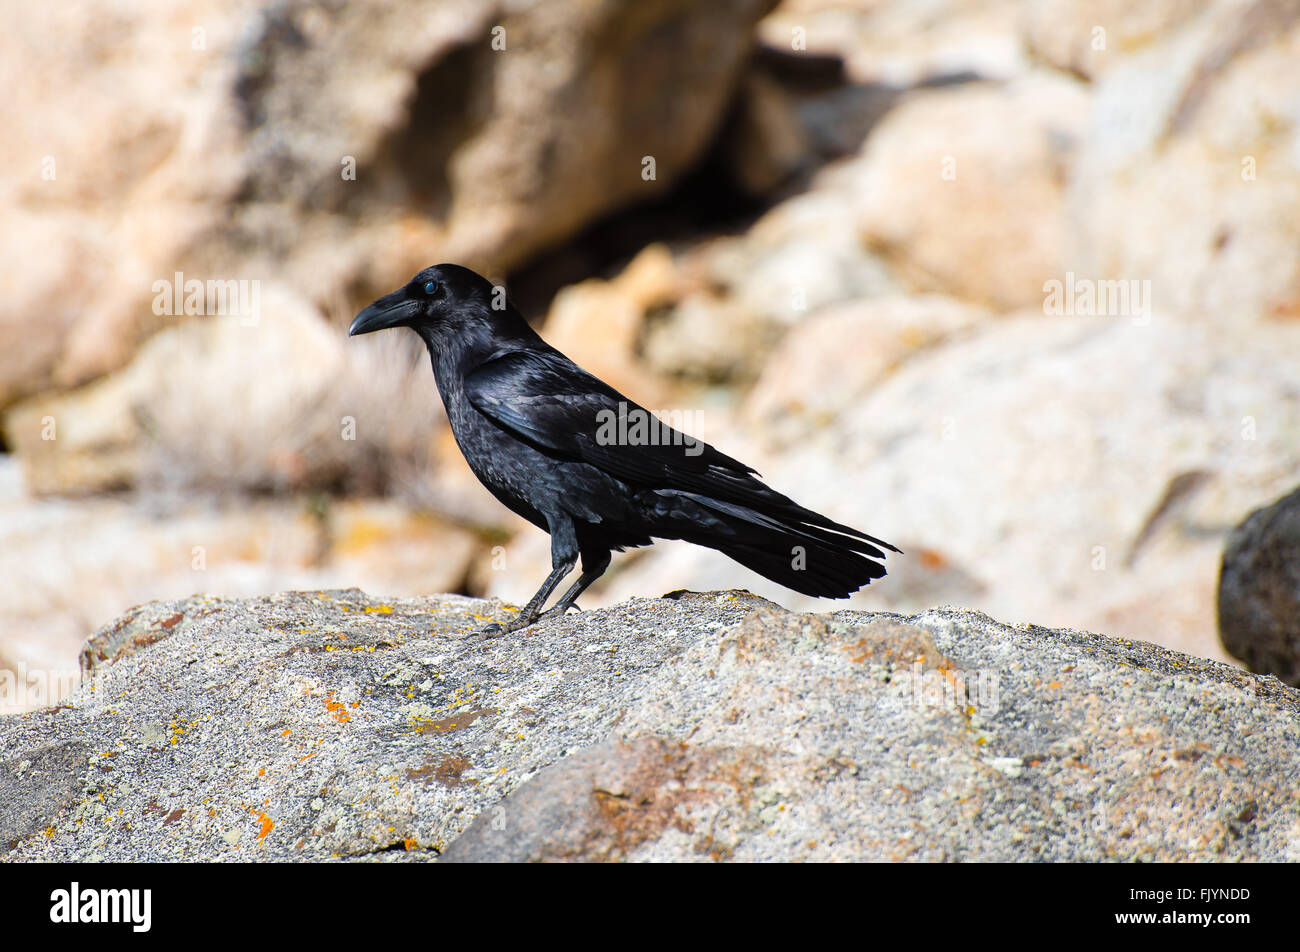 balck raven sitting on a rock Stock Photo